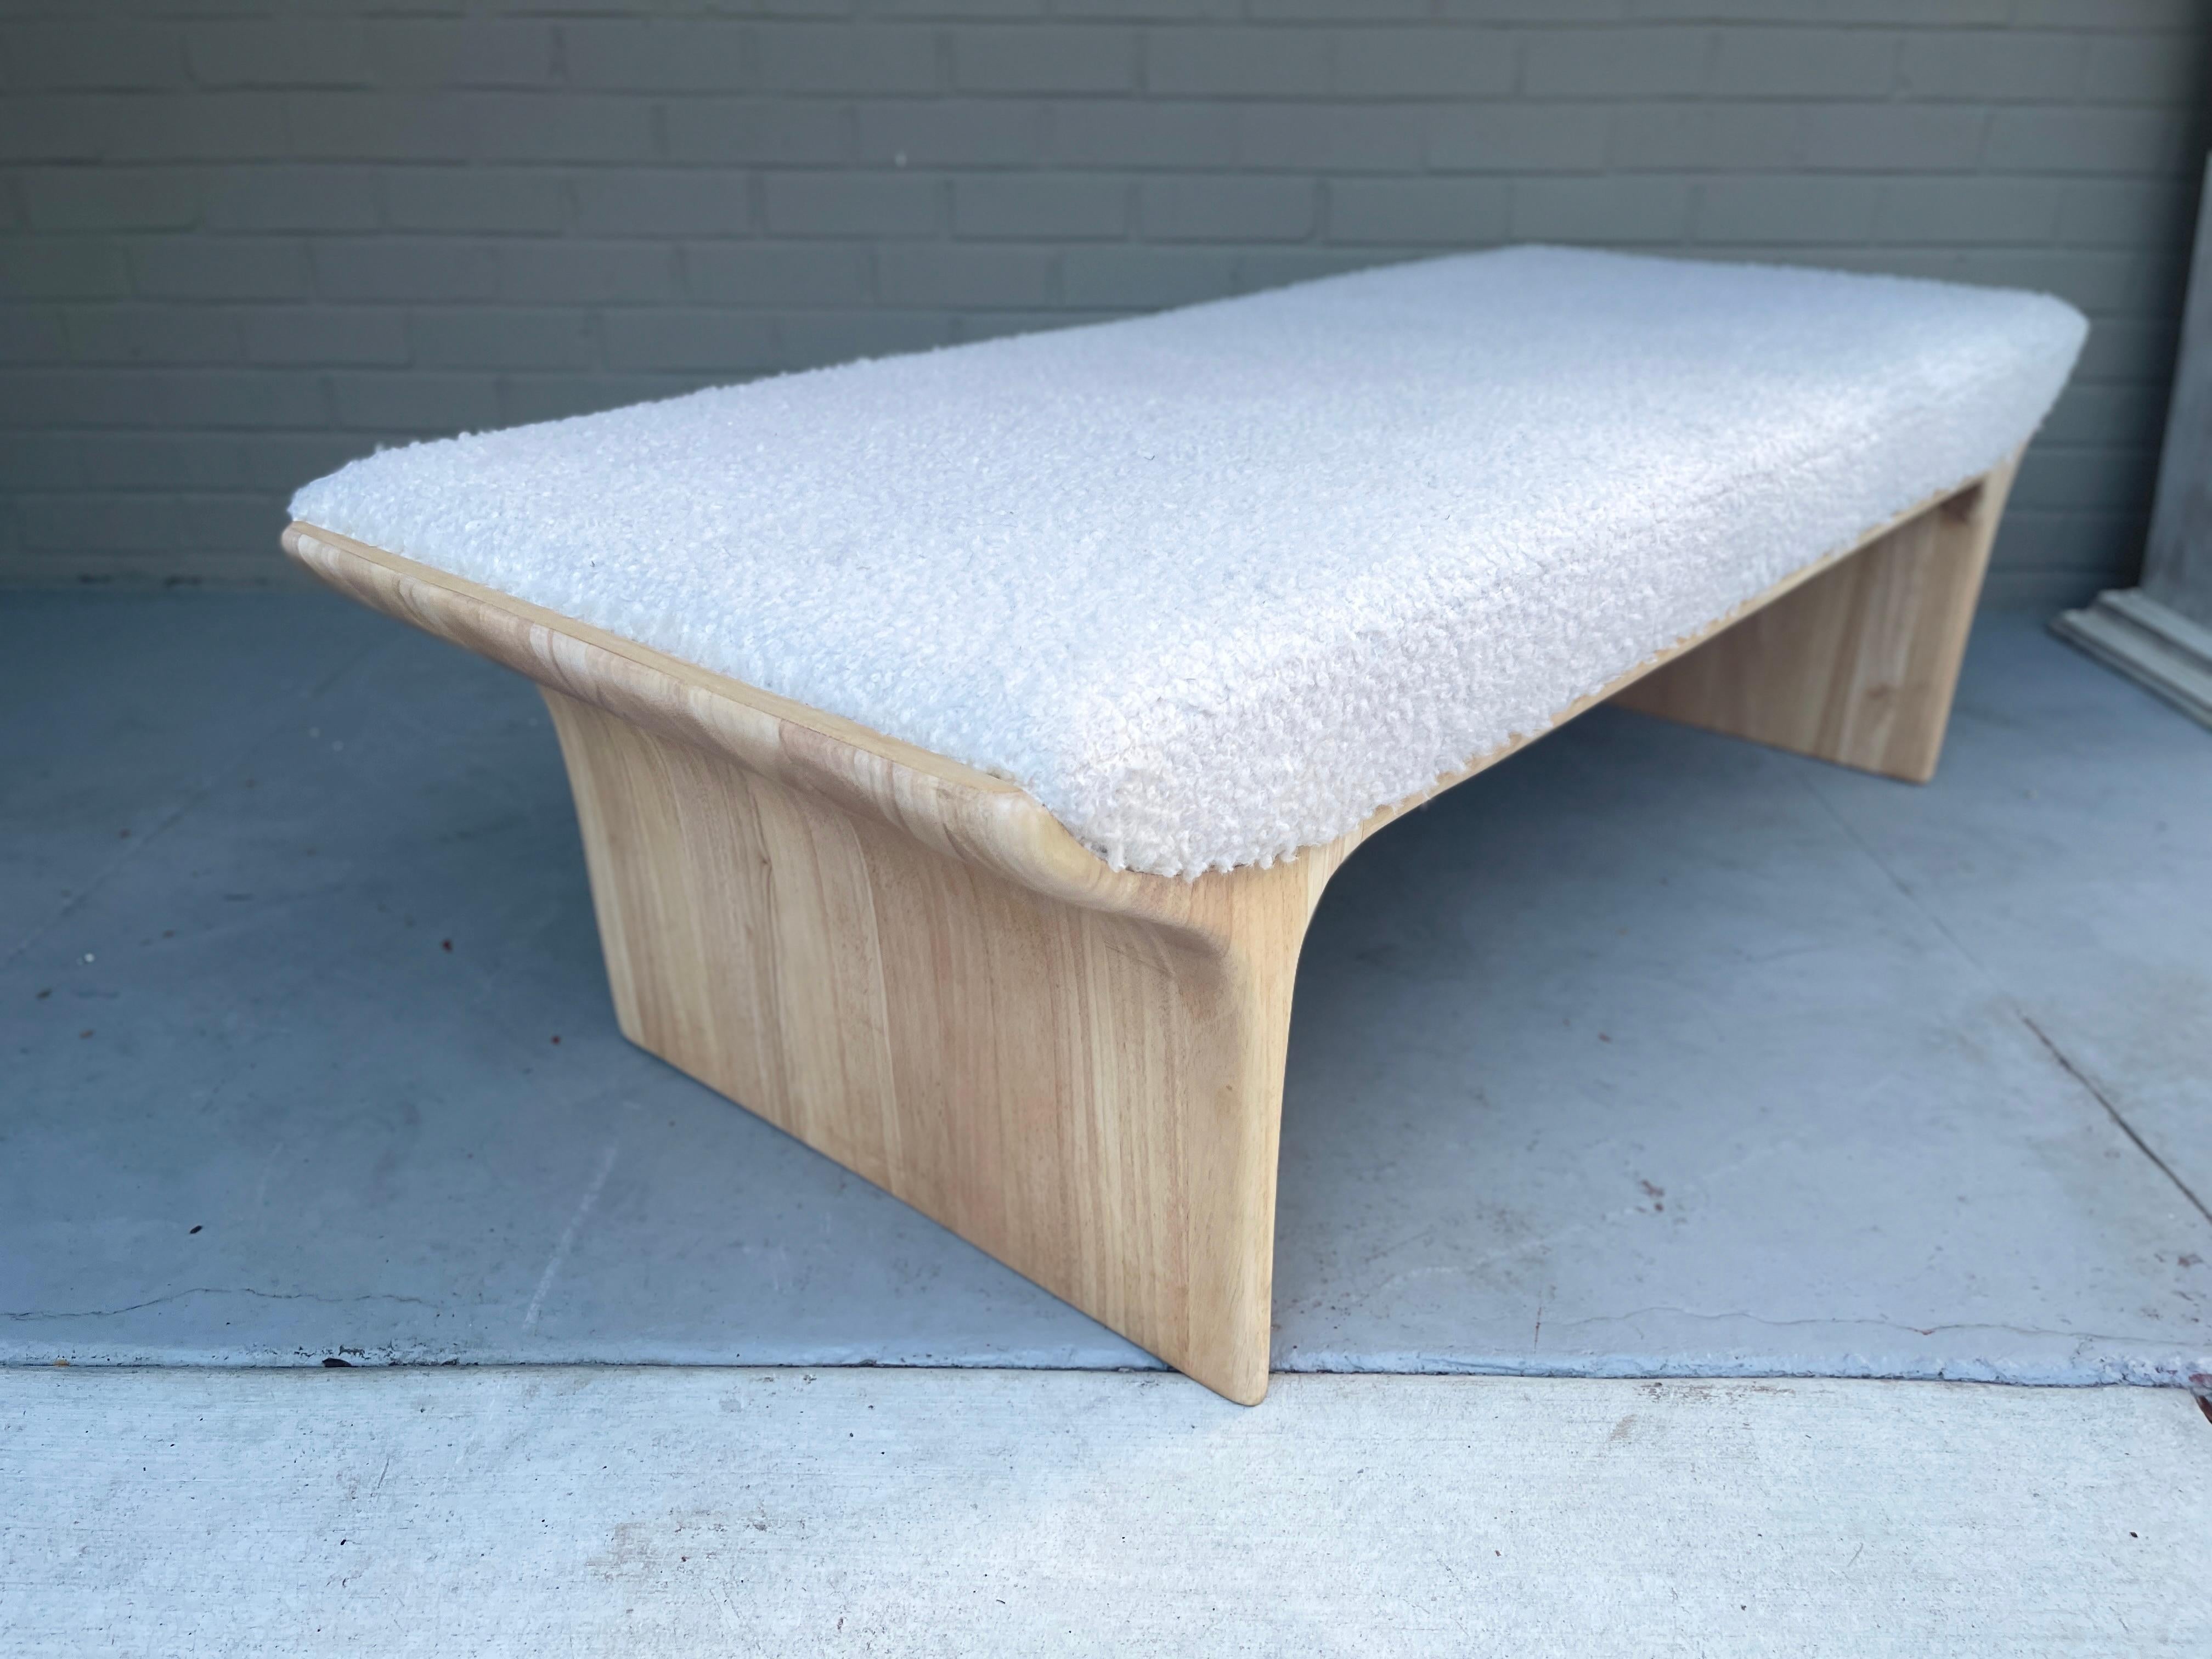 Woodwork Sculptural Waterfall Bench Daybed, Scandinavian Soap Wood Finish Organic Modern